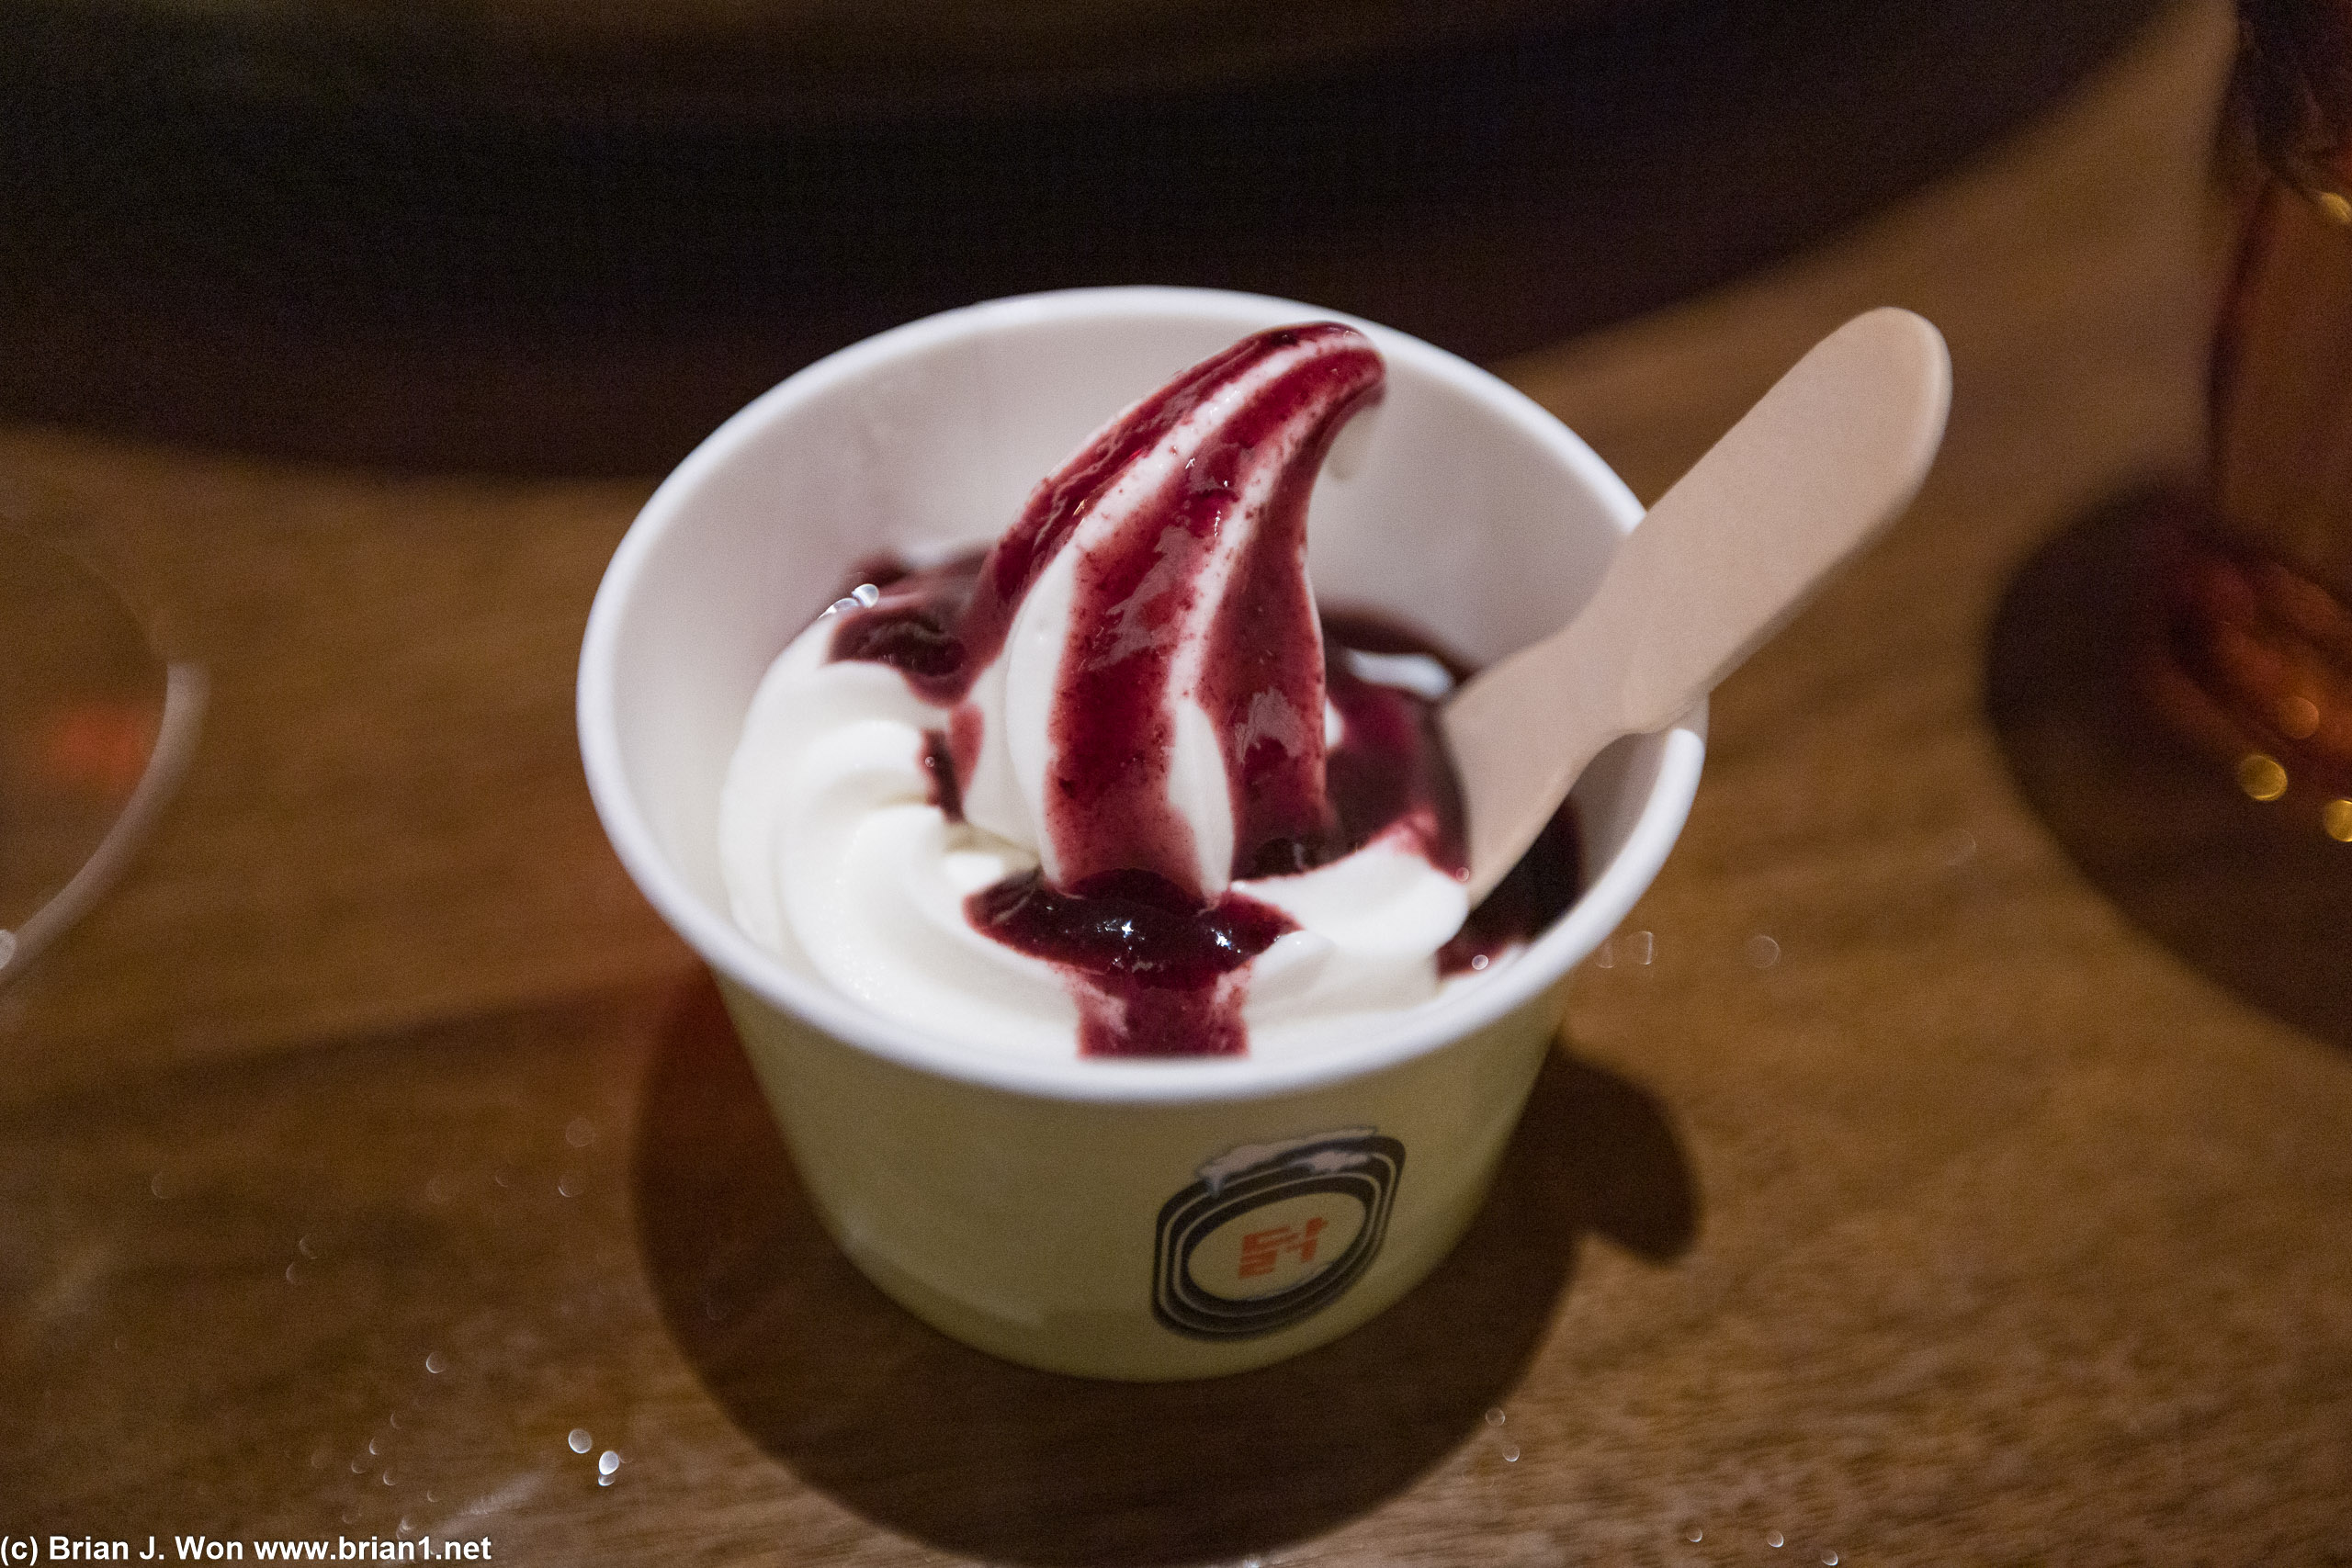 Blueberry-topped ice cream for dessert.